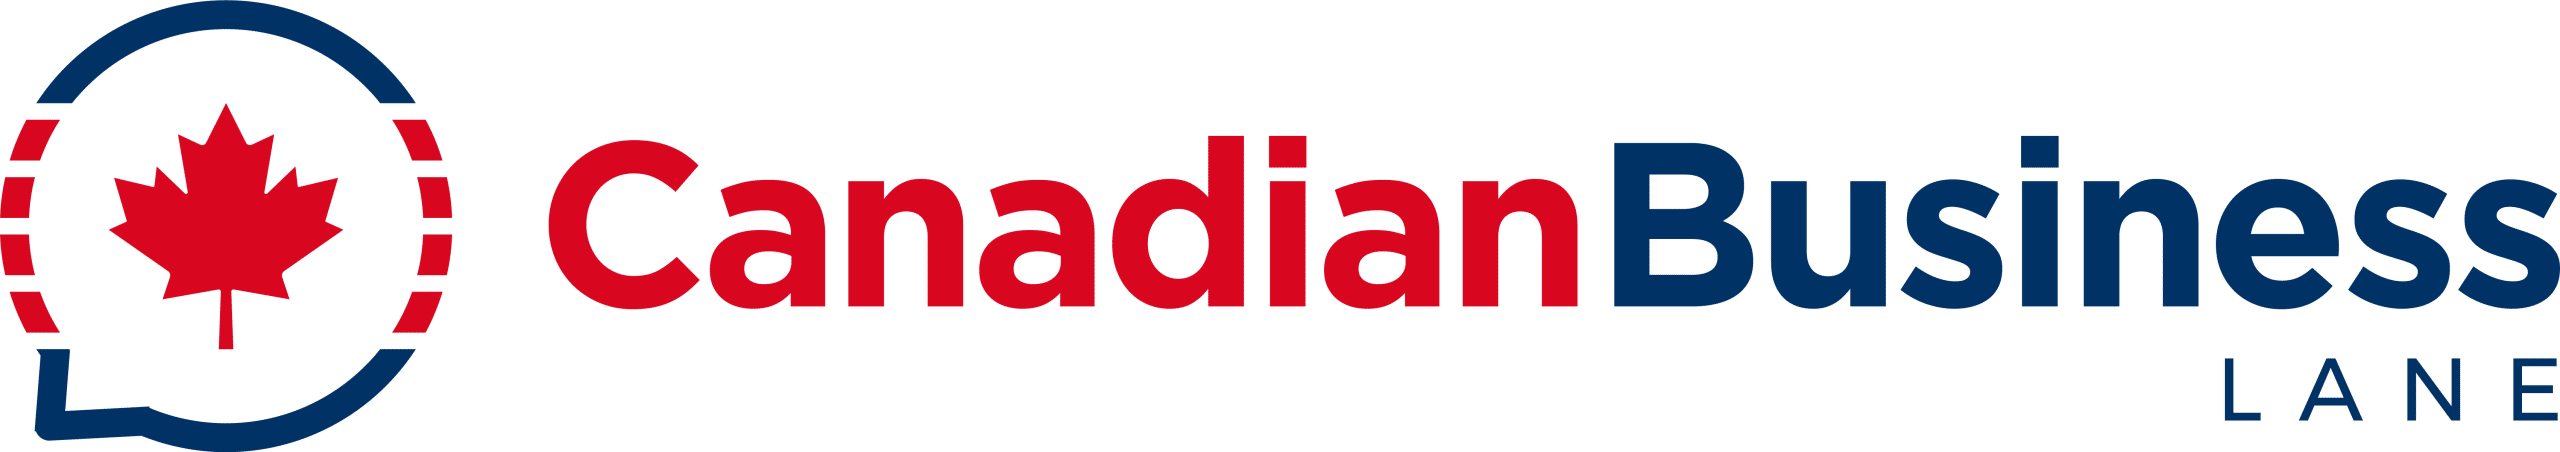 canadian-business-lane-logo